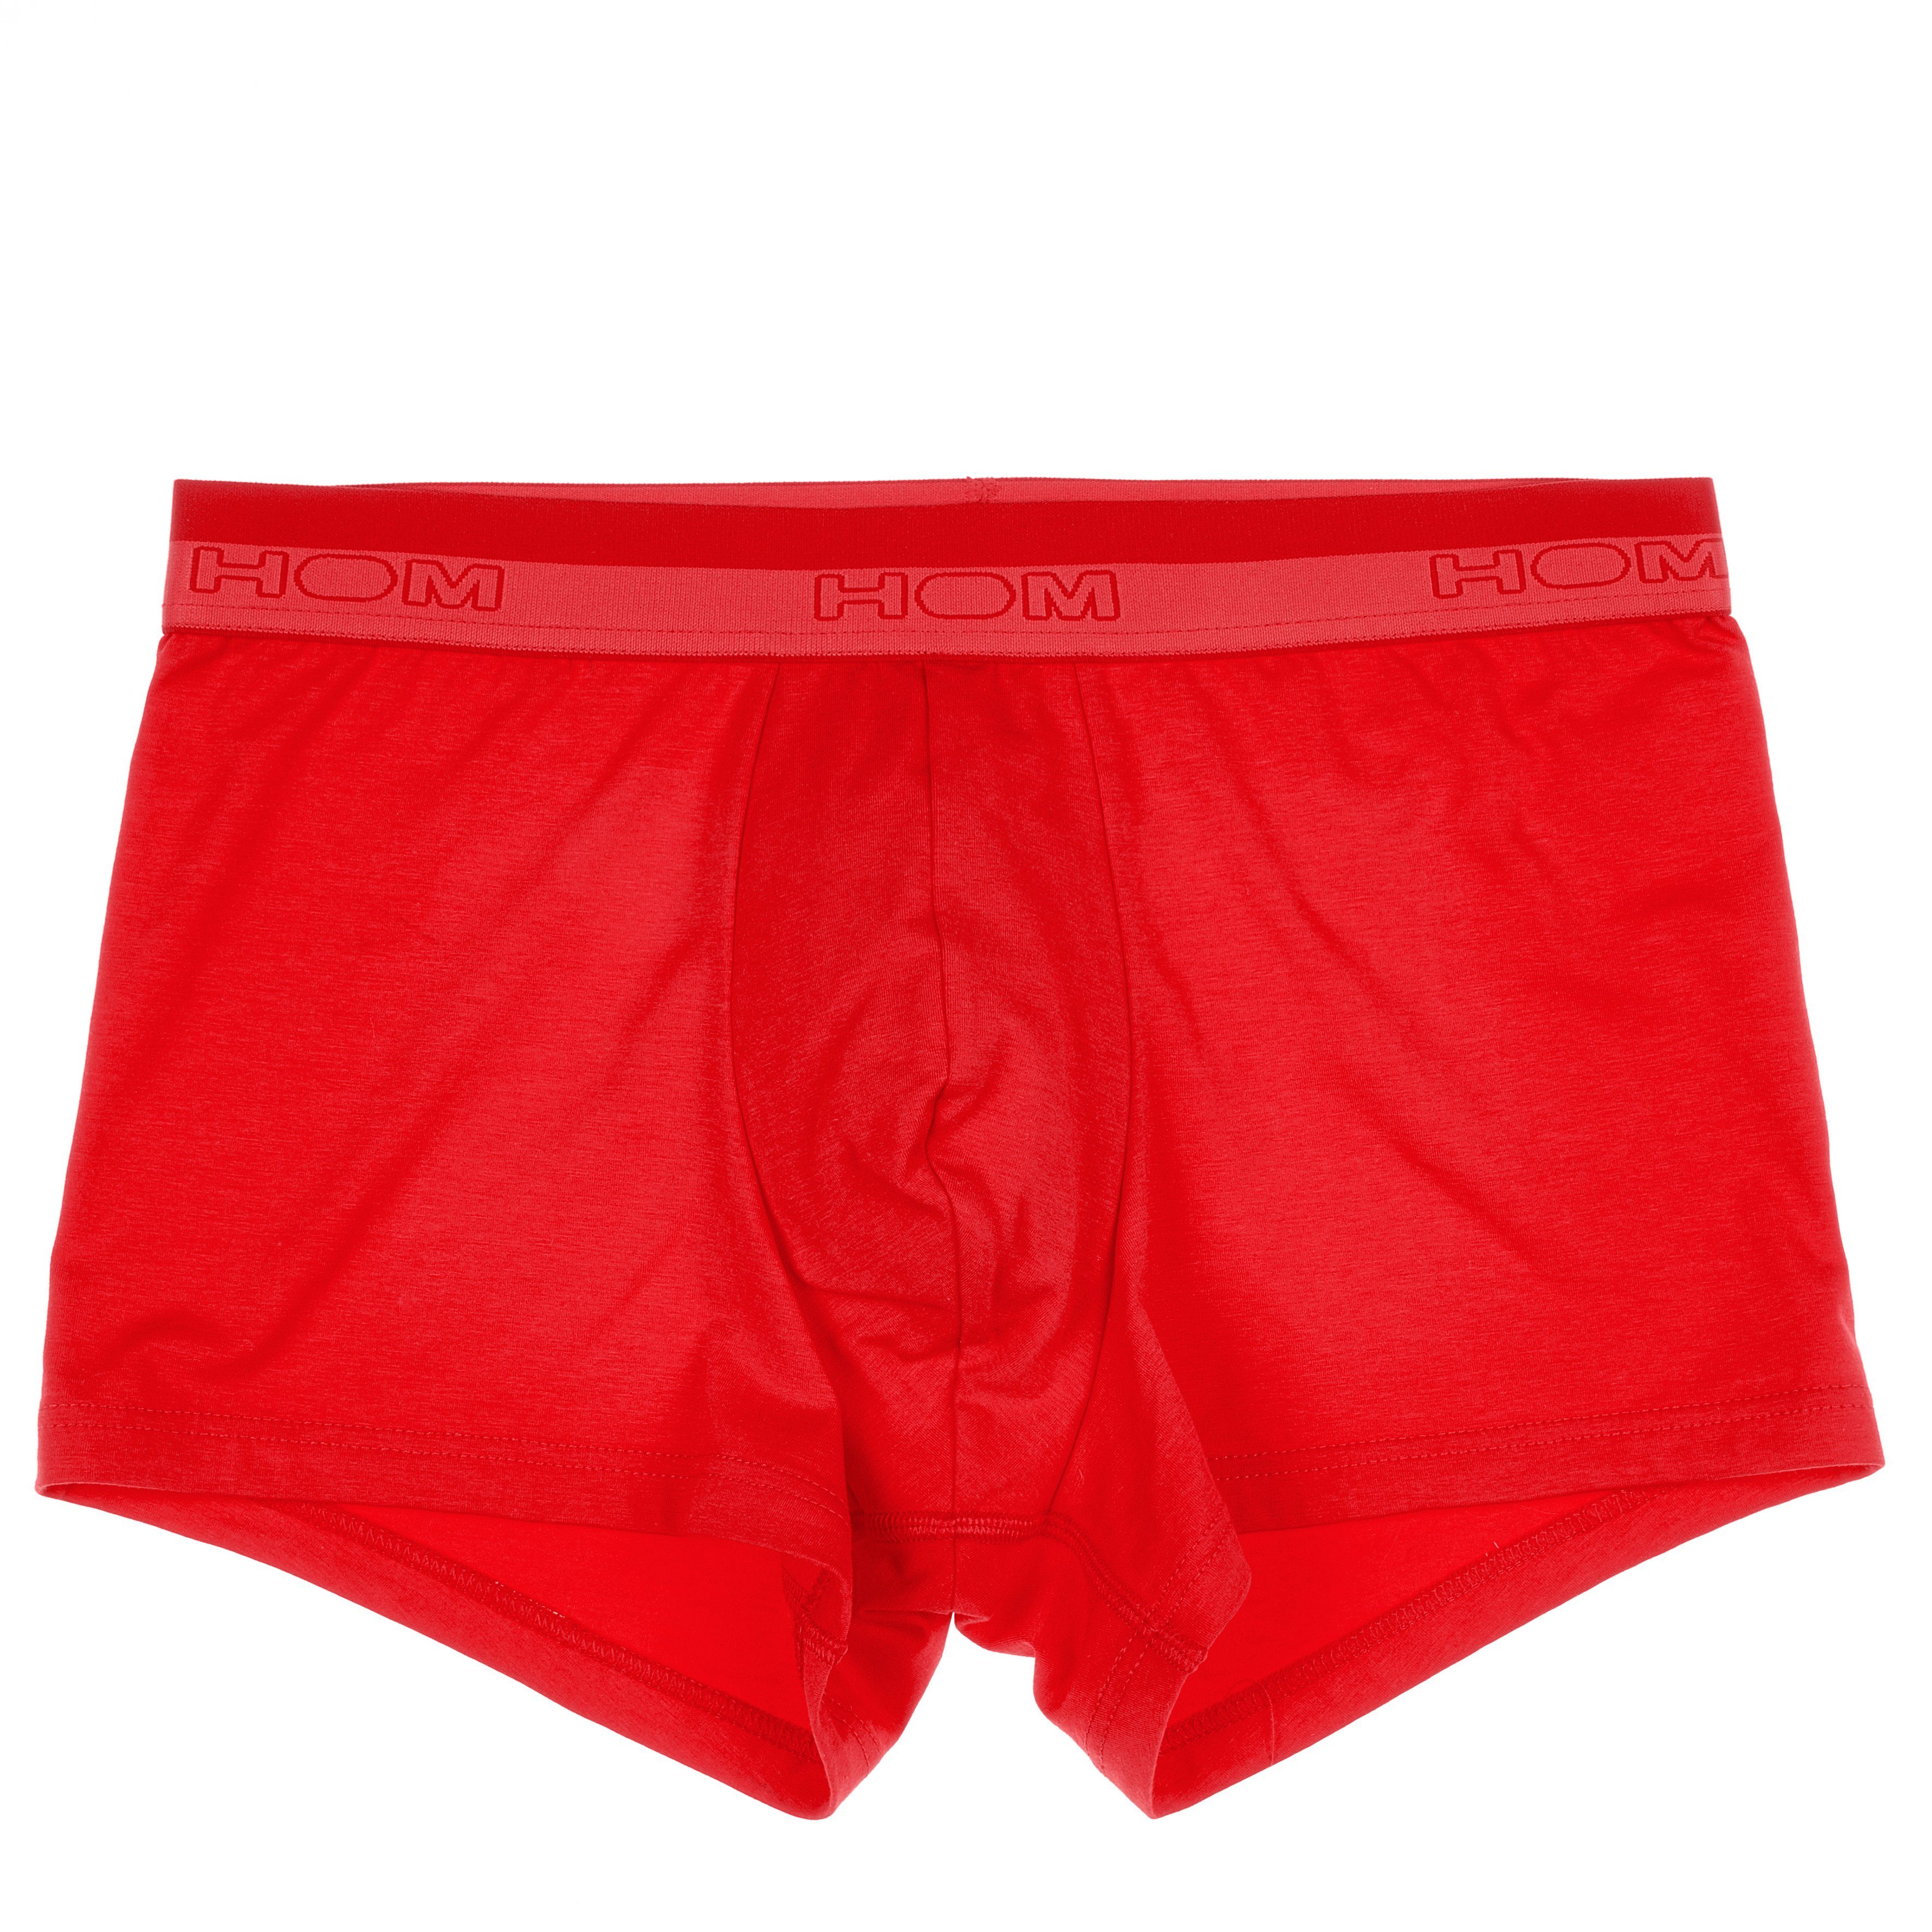 Briefs Retro Classic Hom Pants red Boxer